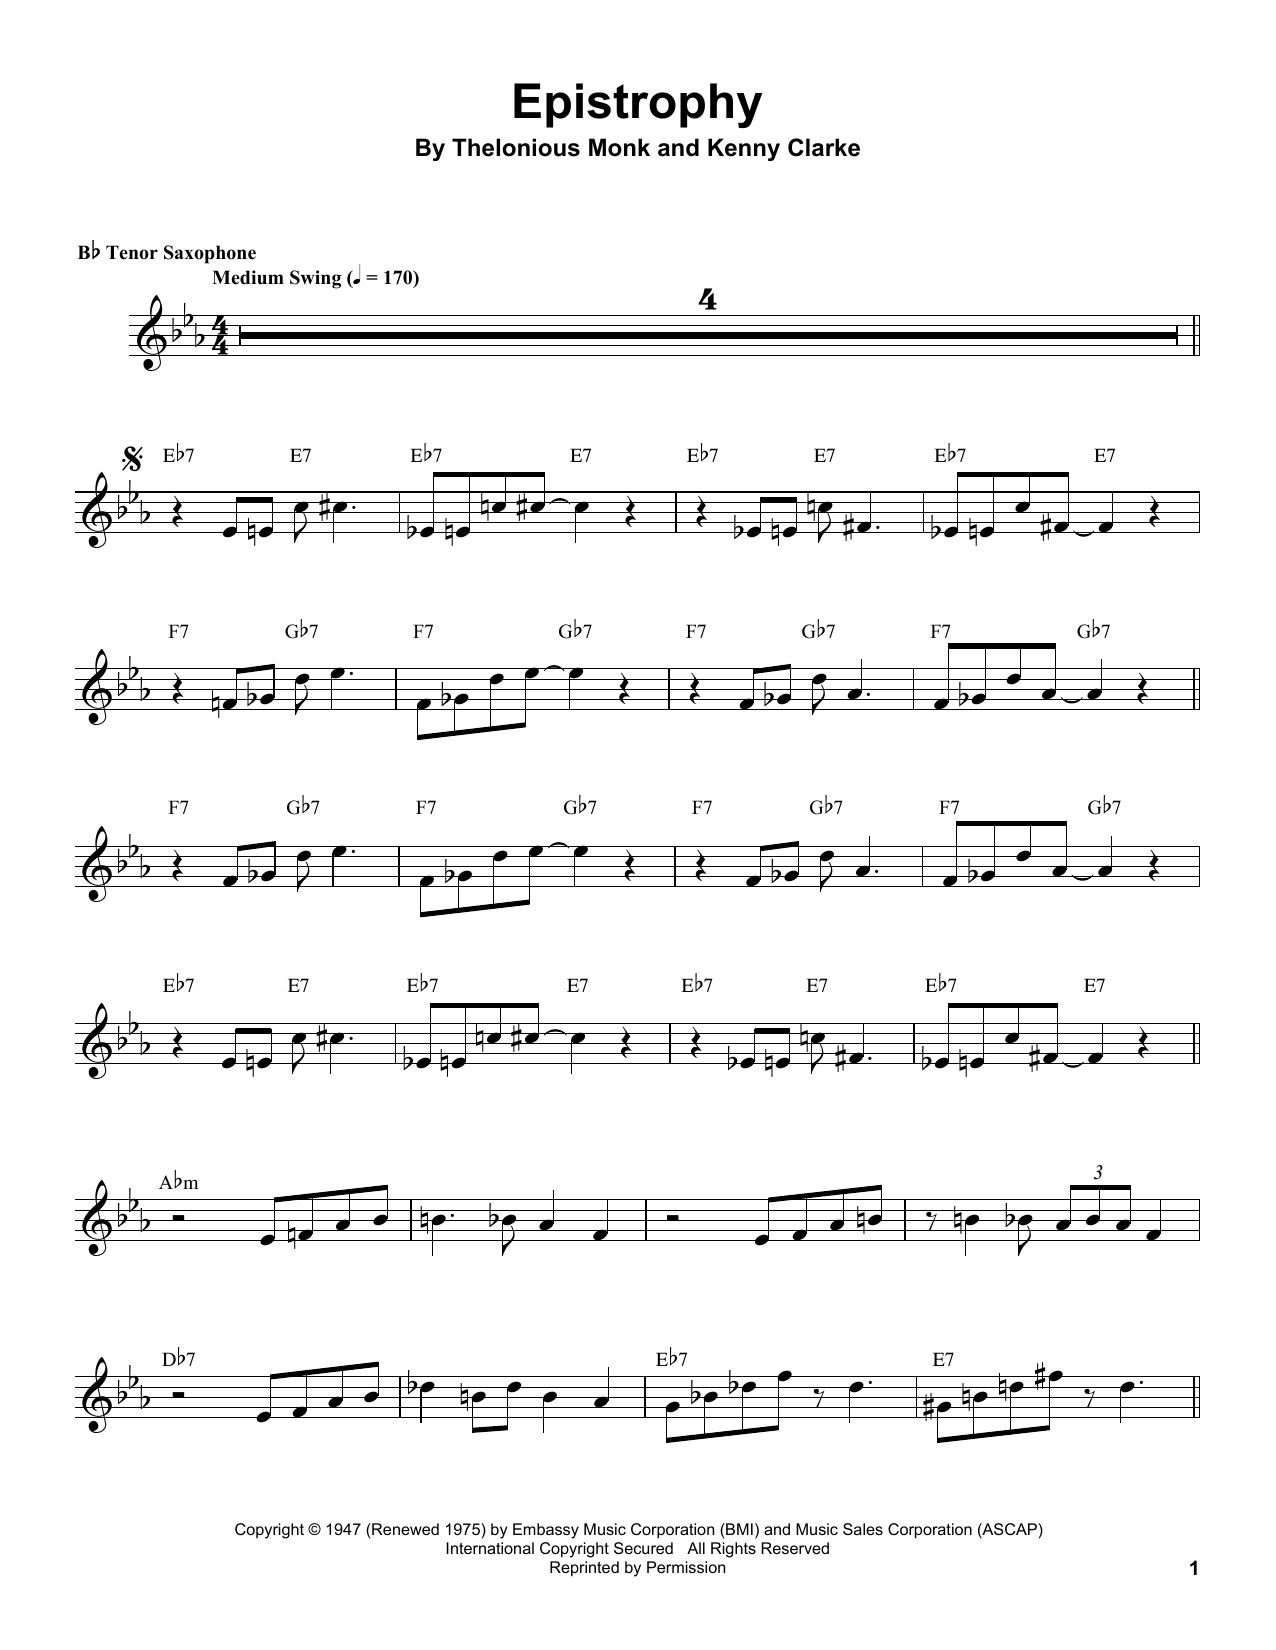 Coleman Hawkins Epistrophy Sheet Music Notes & Chords for Tenor Sax Transcription - Download or Print PDF